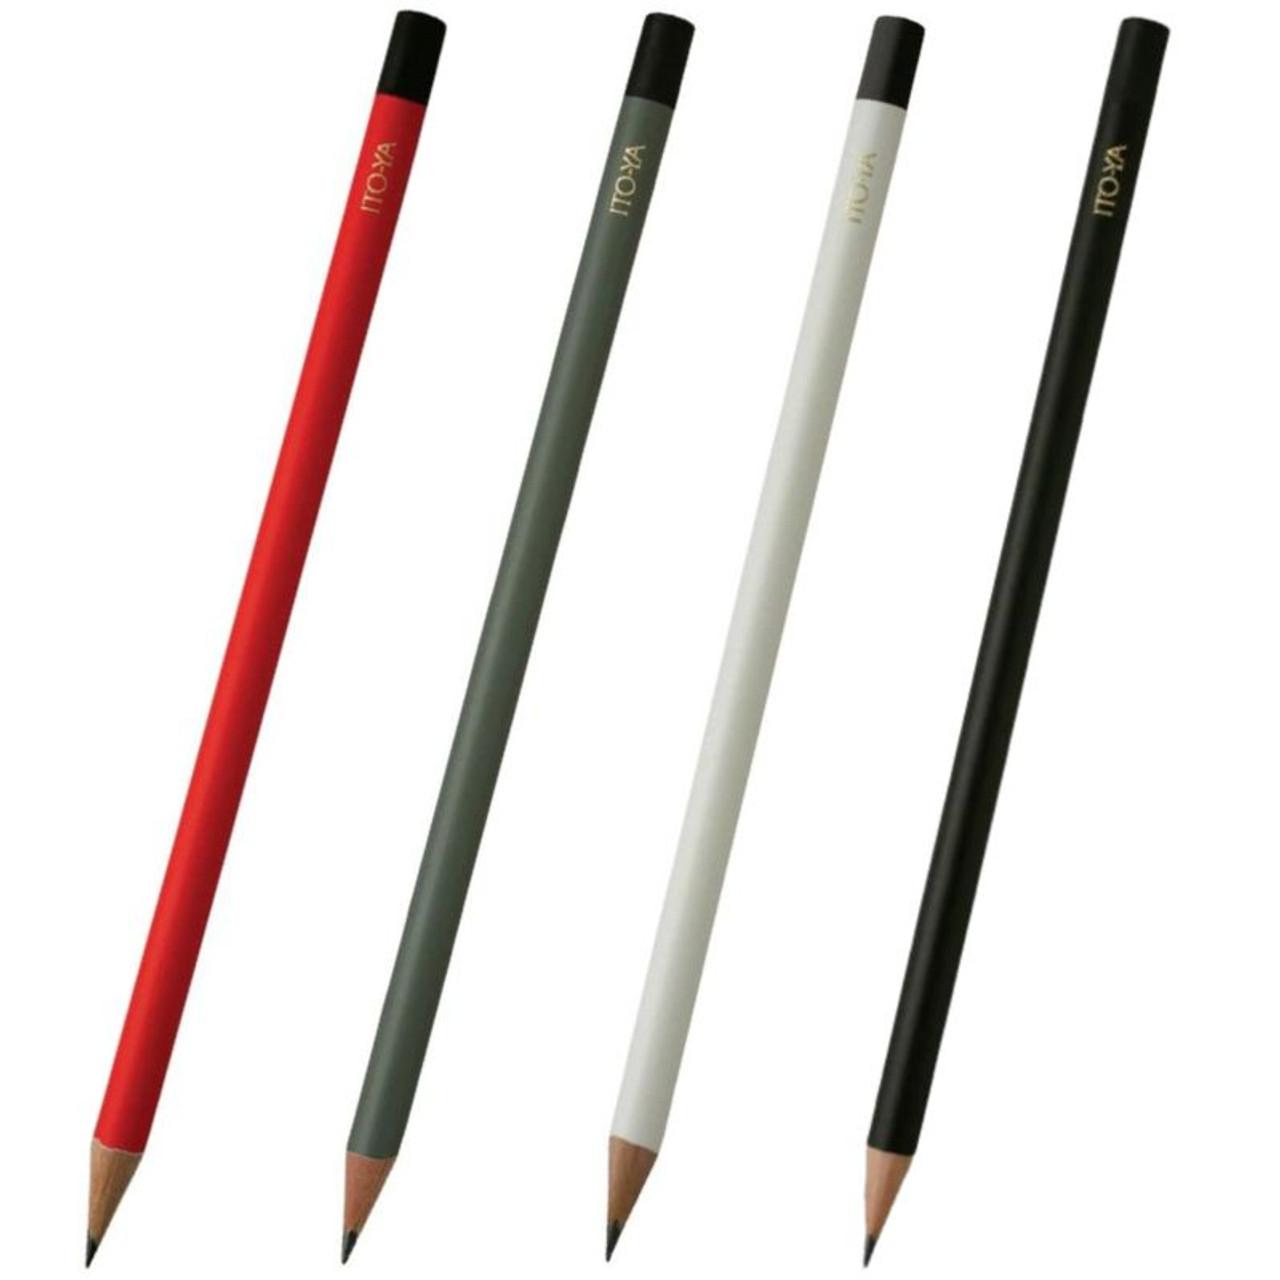 Itoya Ginza Pencils